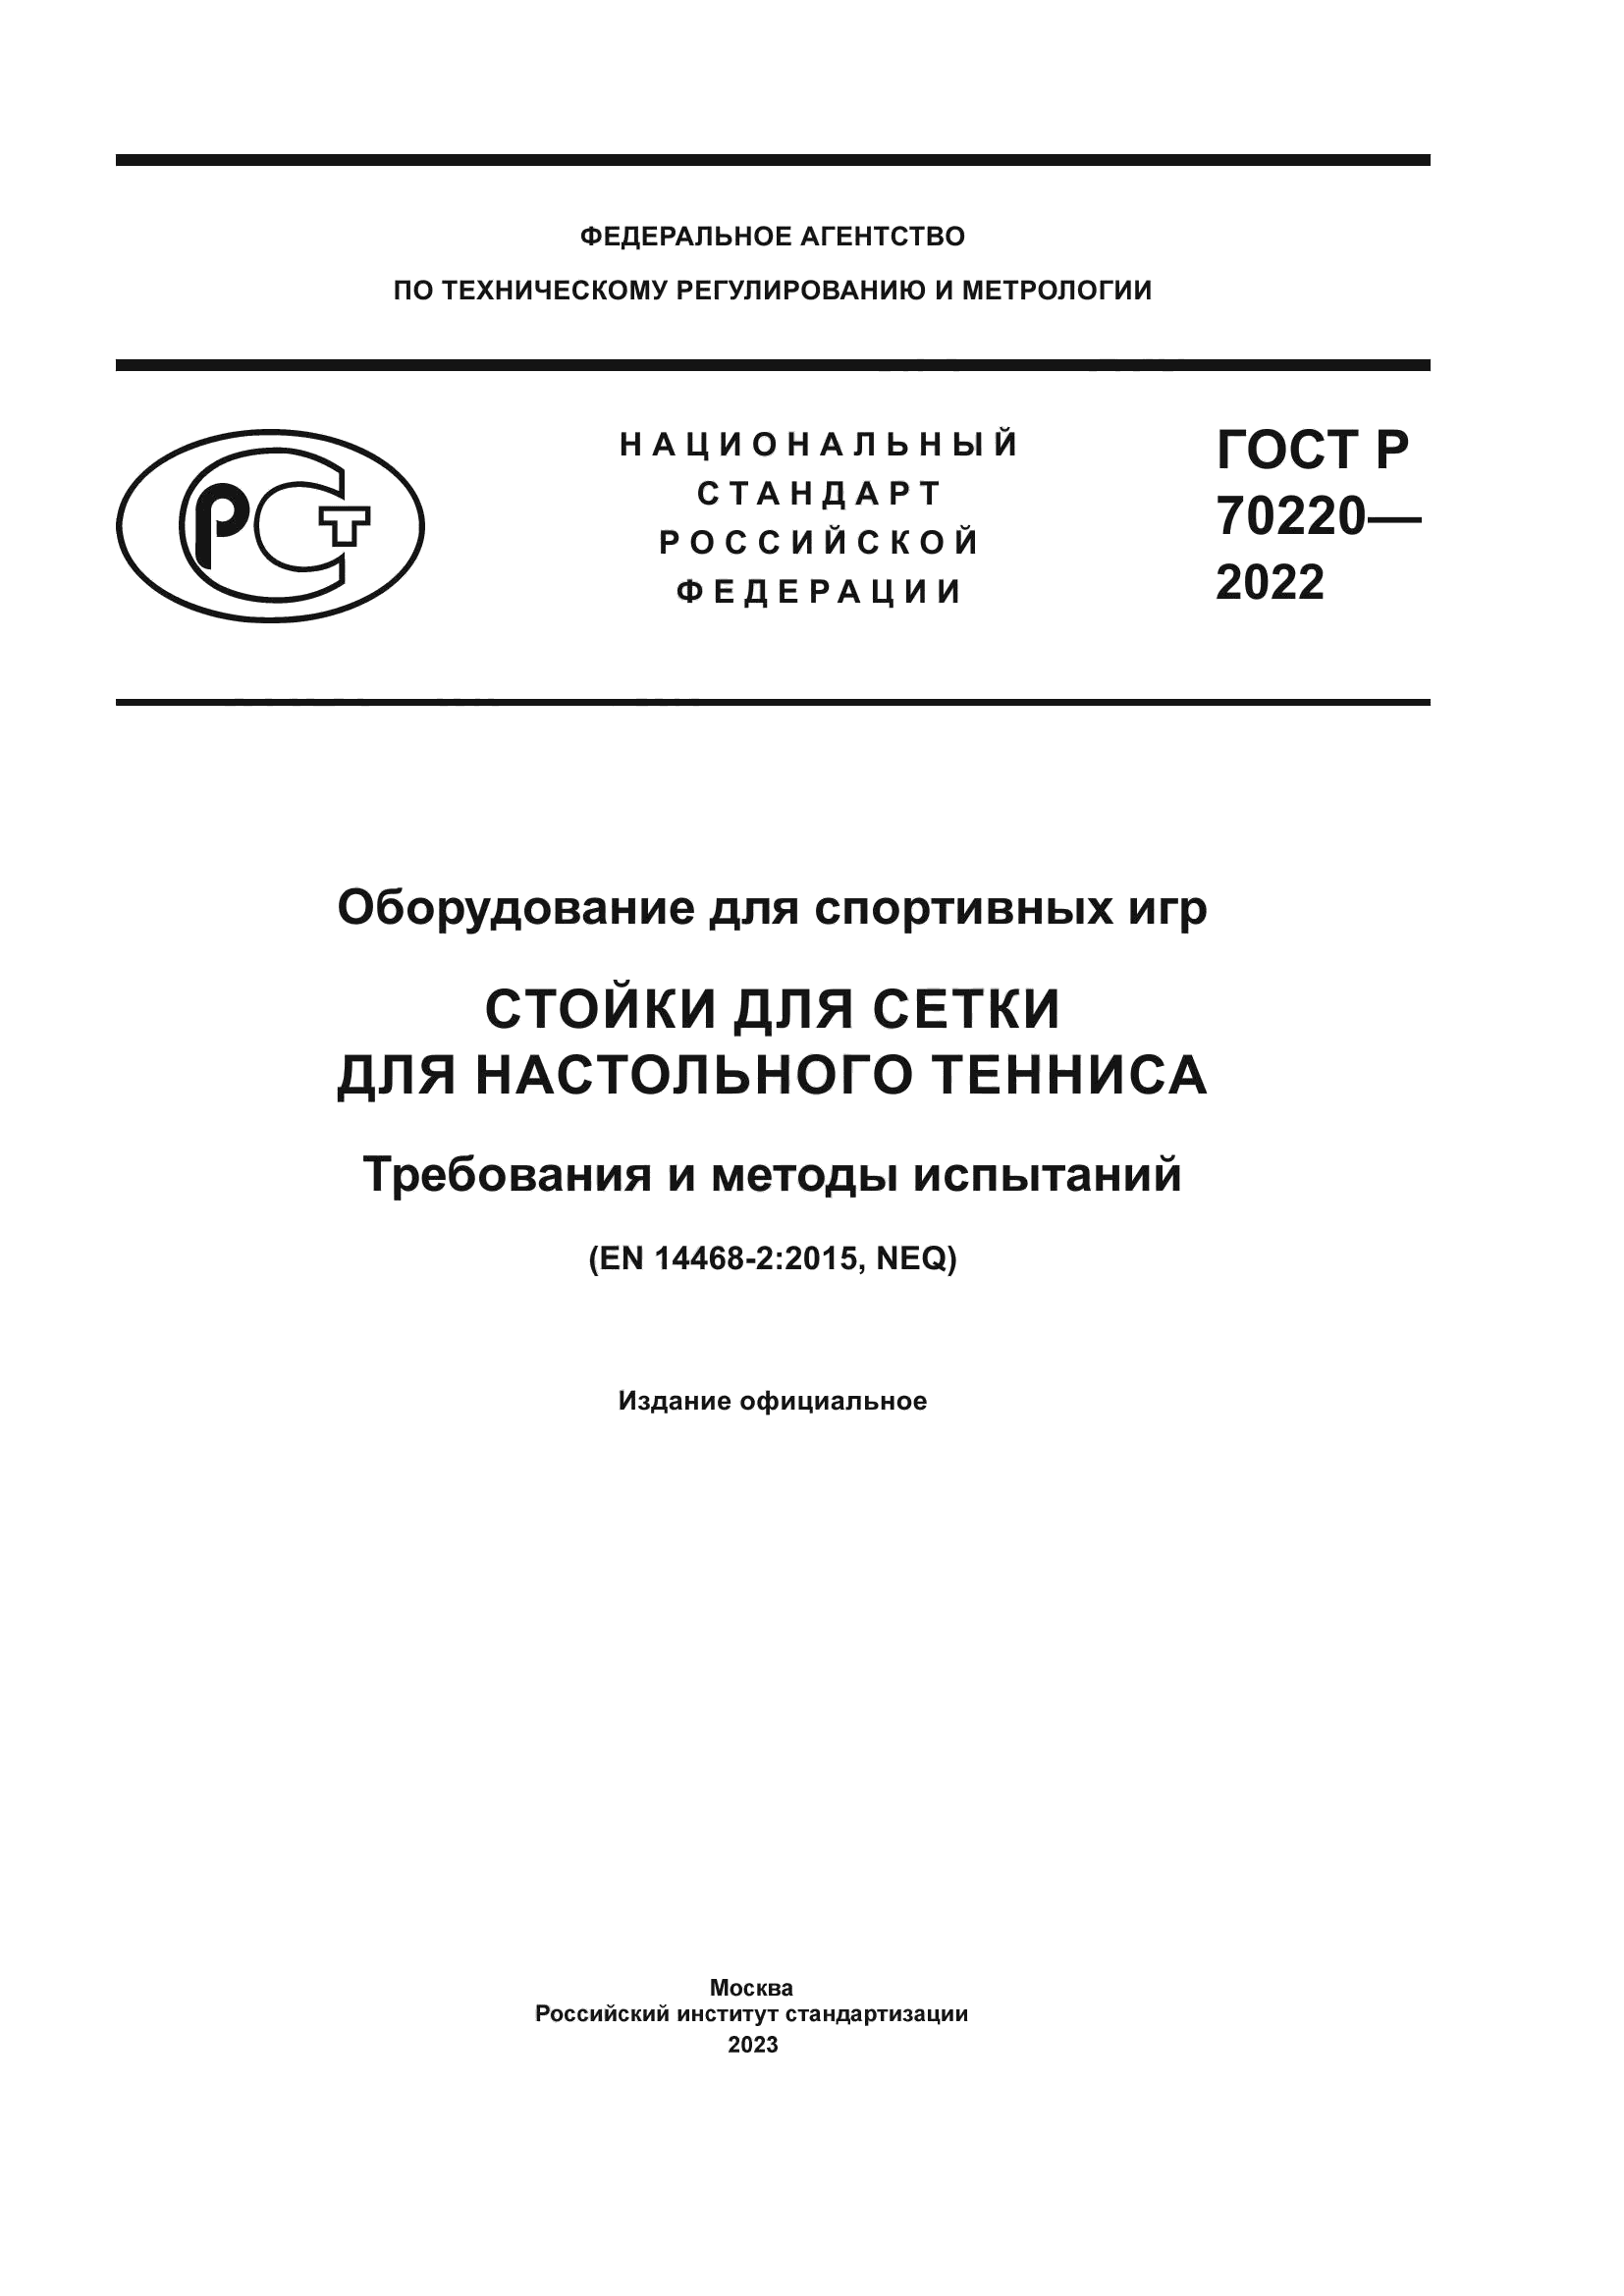 ГОСТ Р 70220-2022